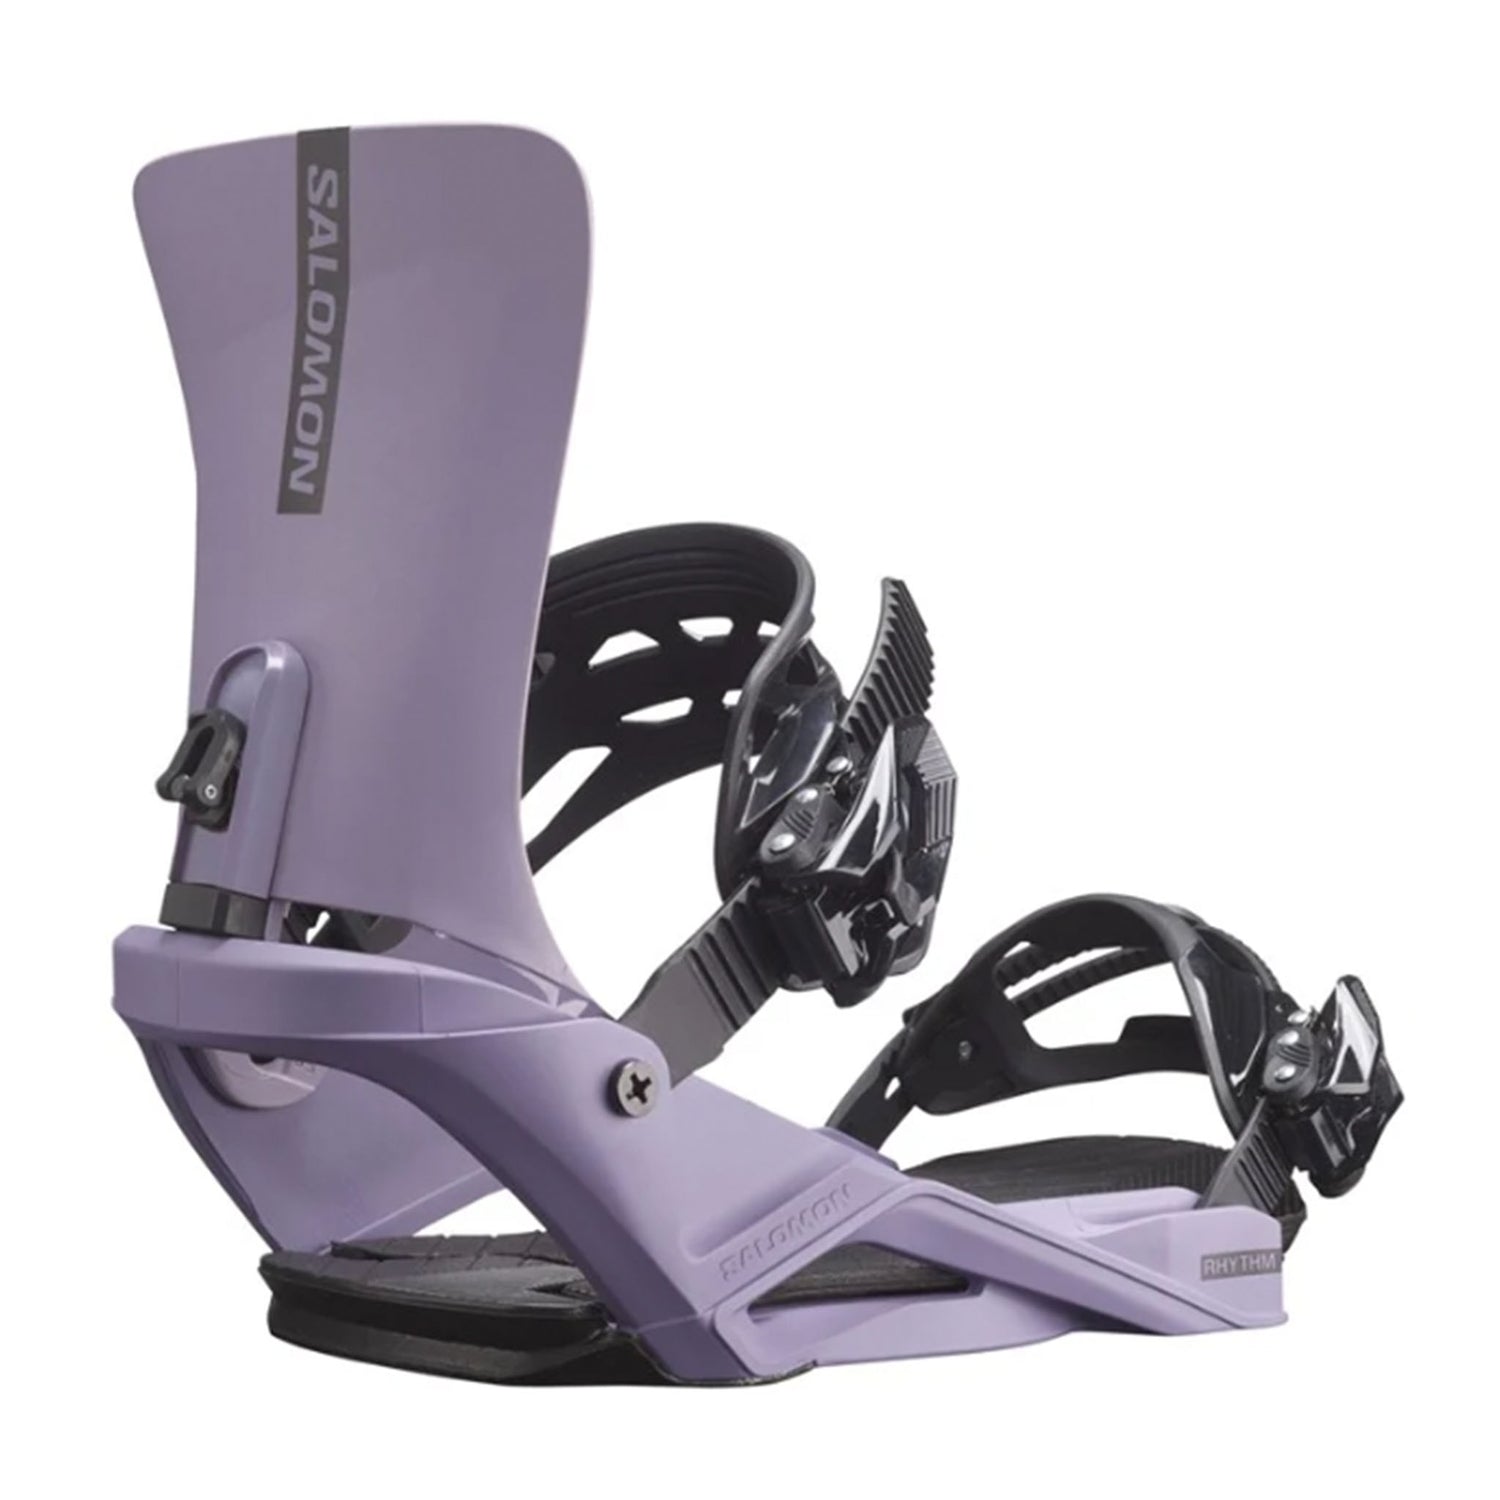 Salomon Rhythm Snowboard Bindings in Purple